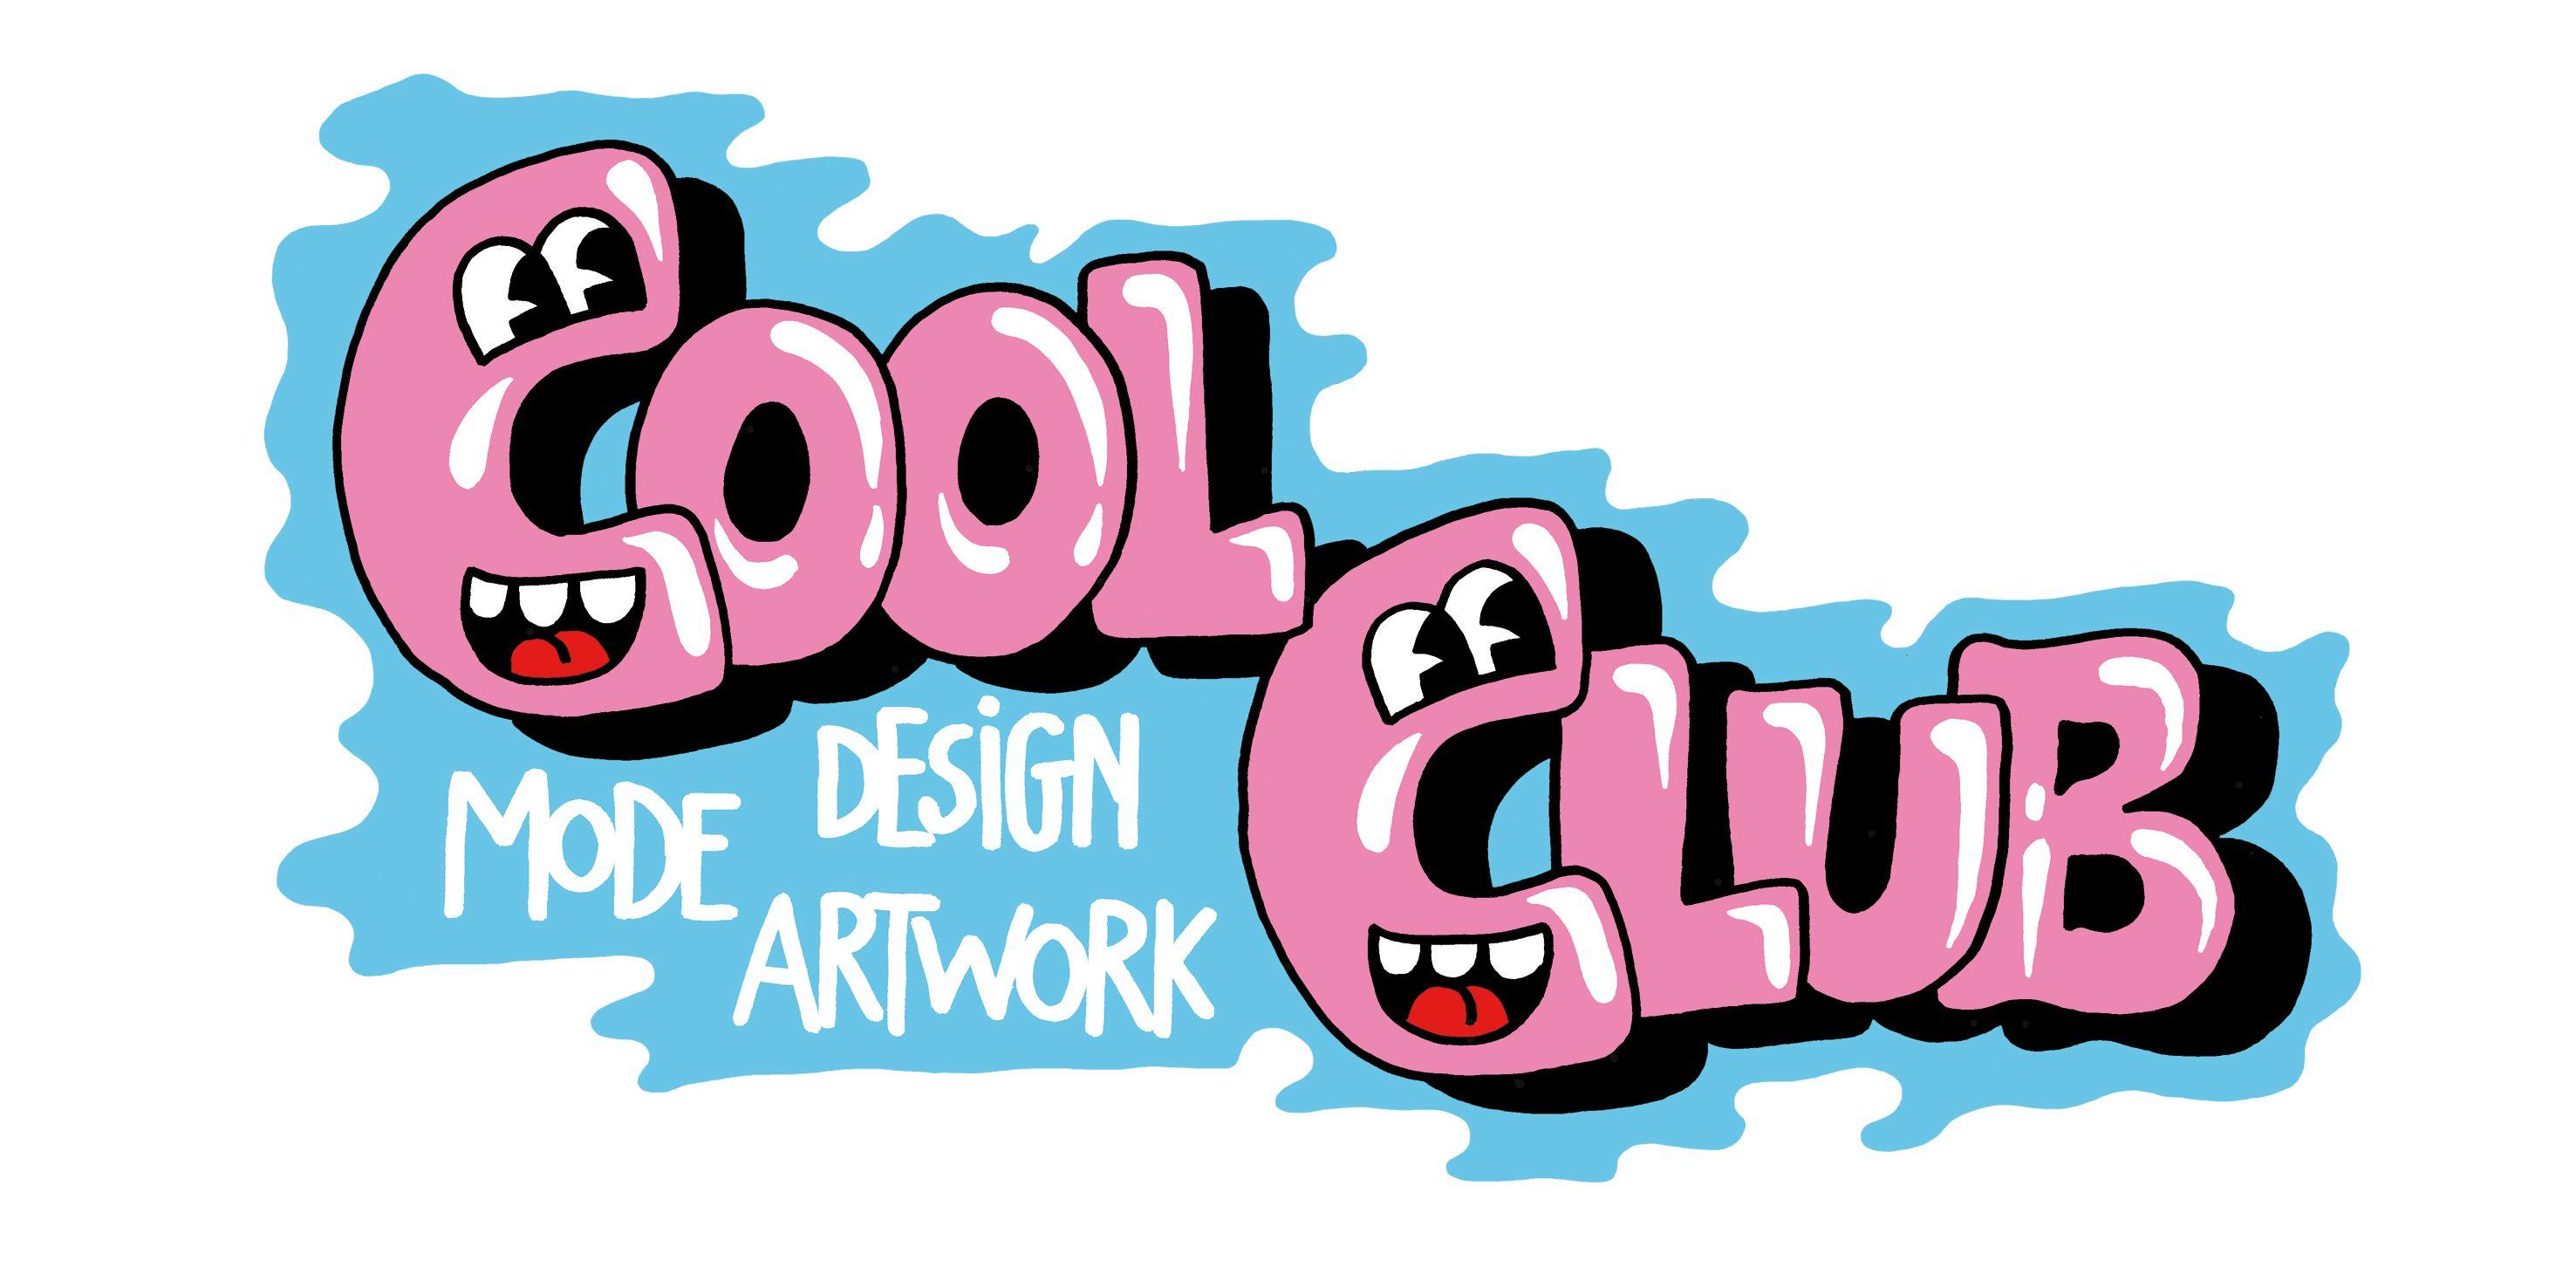 Cool Club Logo - Quentin Chambry